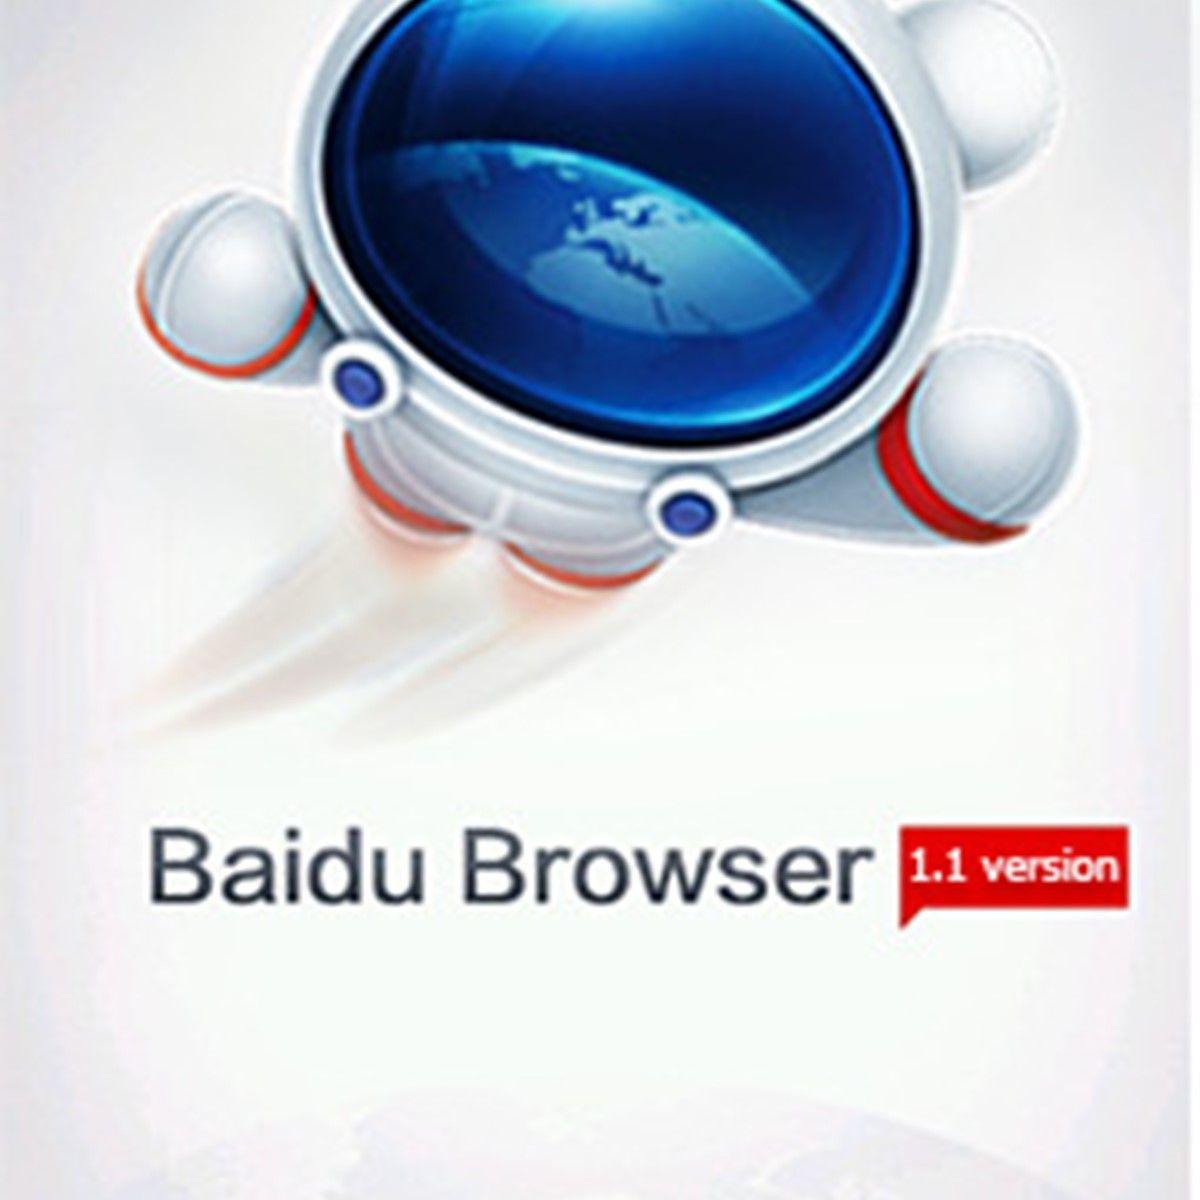 Baidu Browser Logo - Baidu Browser Alternatives and Similar Apps - AlternativeTo.net